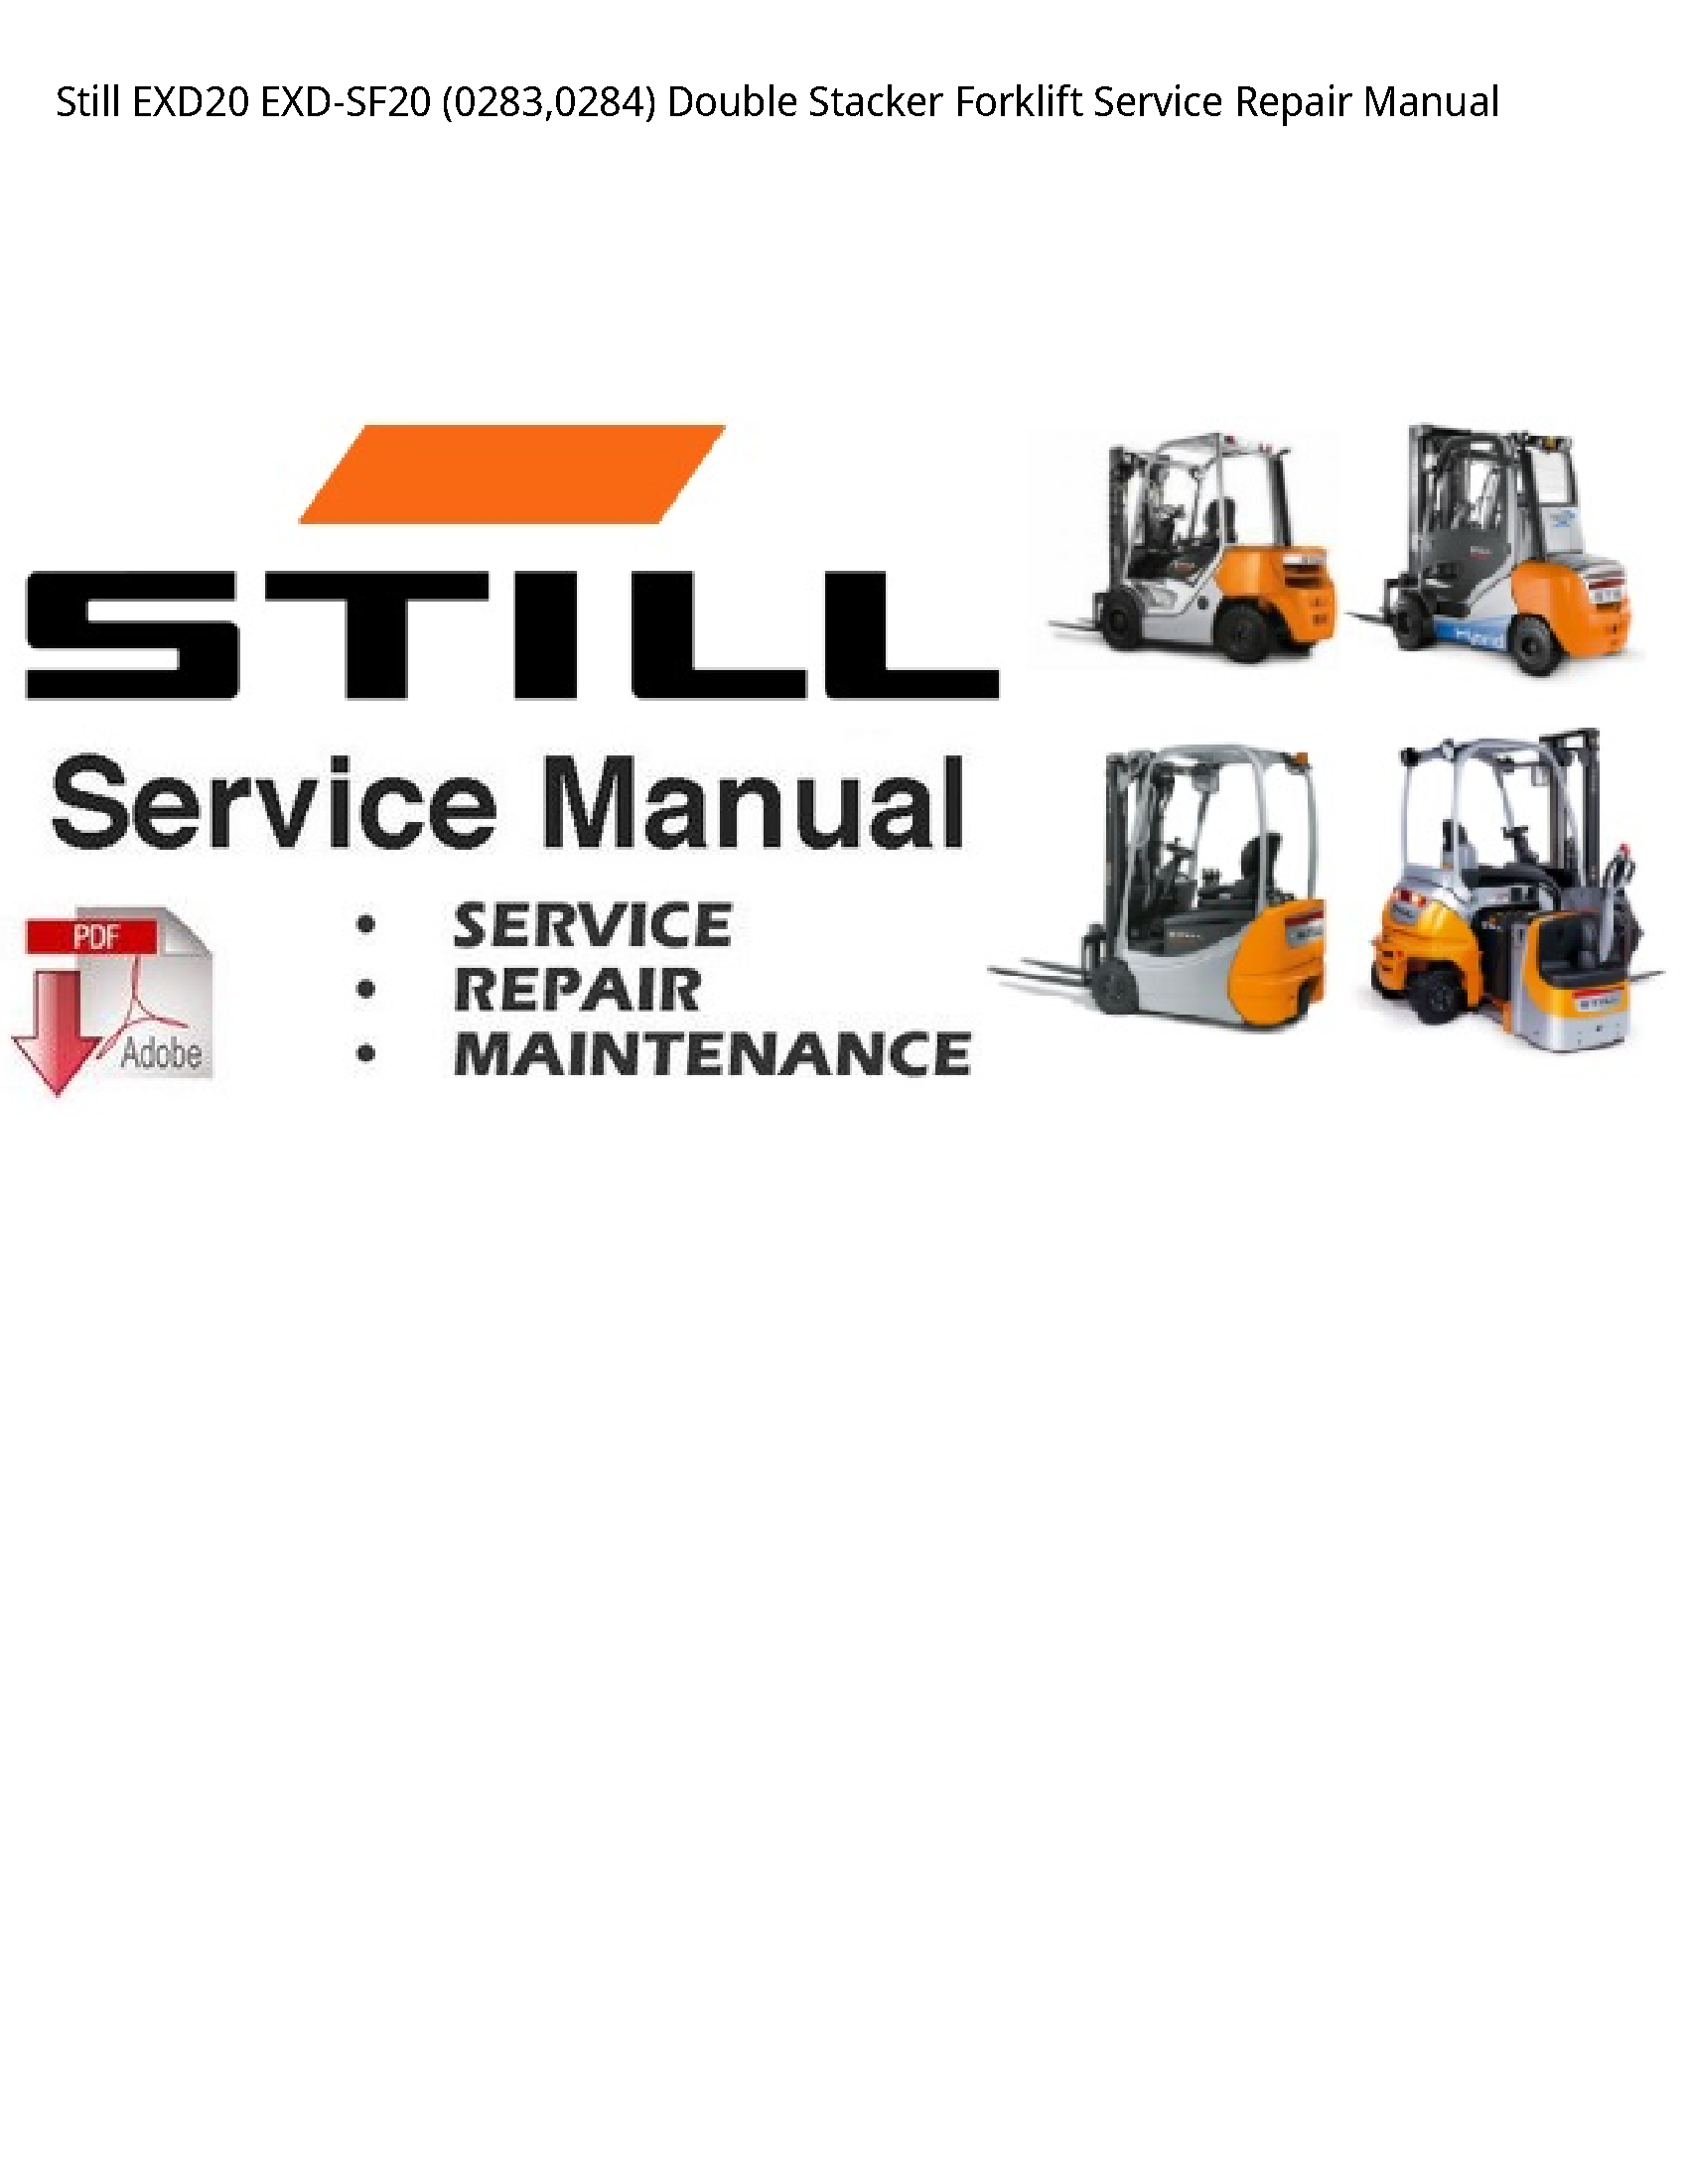 Still EXD20 Double Stacker Forklift manual